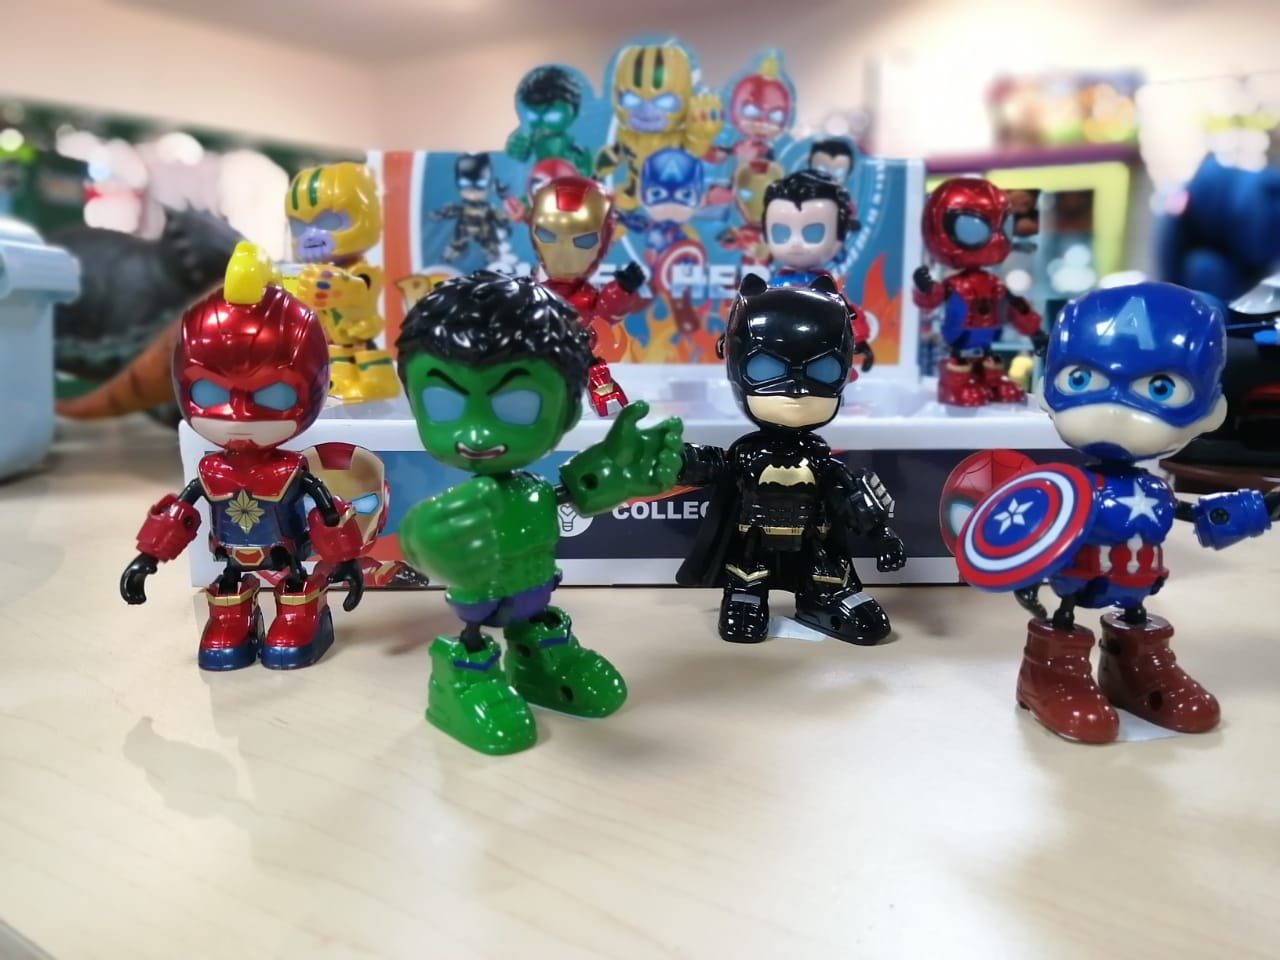 Muñecos de super héroes